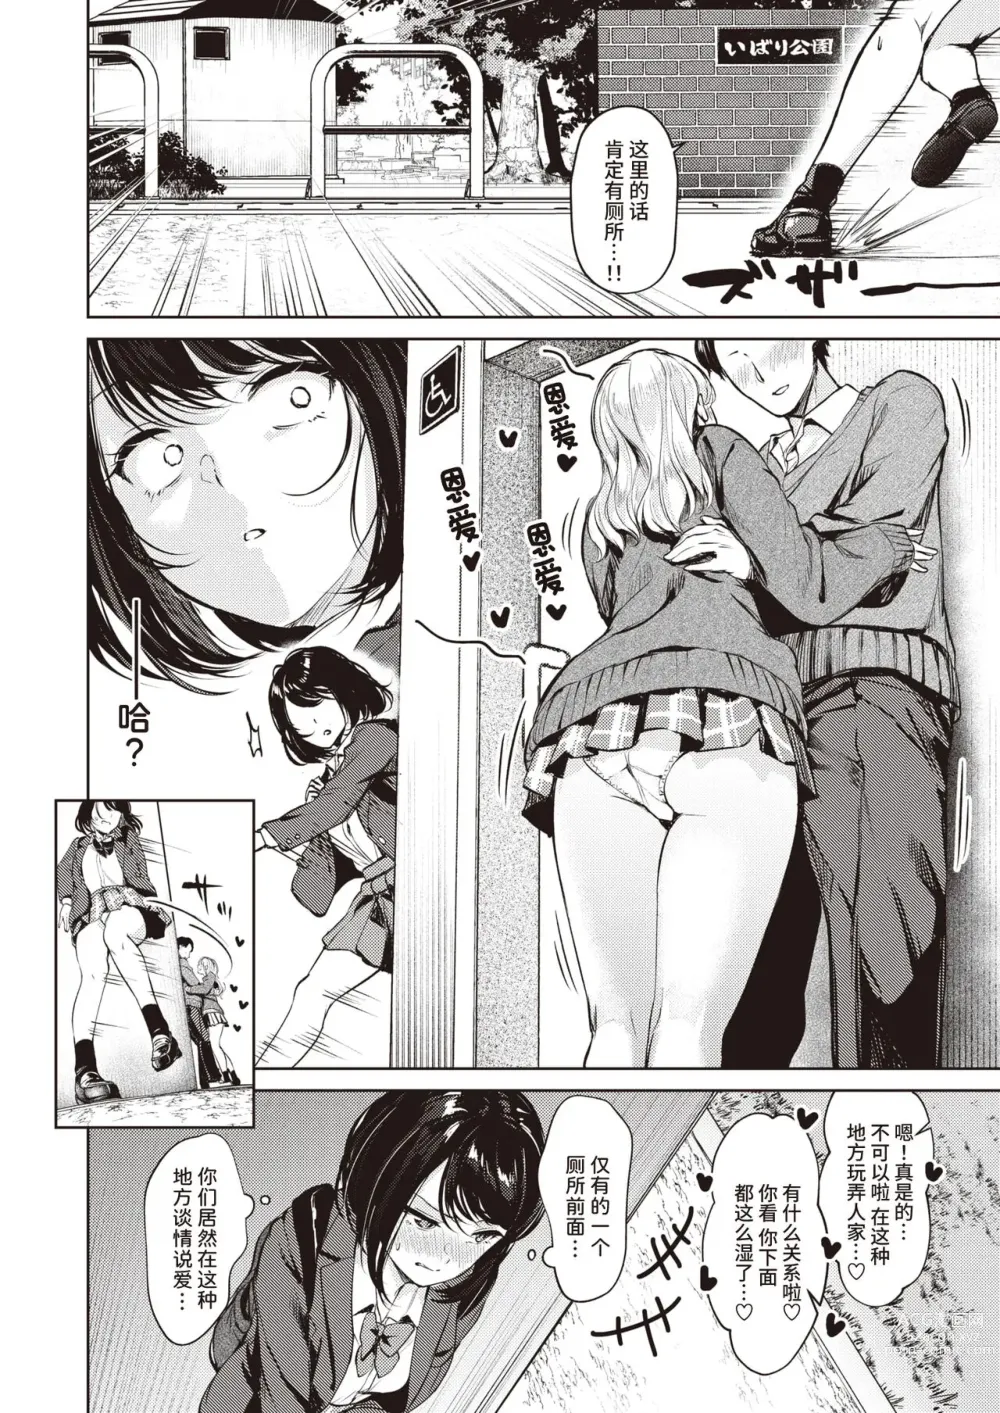 Page 2 of manga Saifu o Wasureta dake nanoni